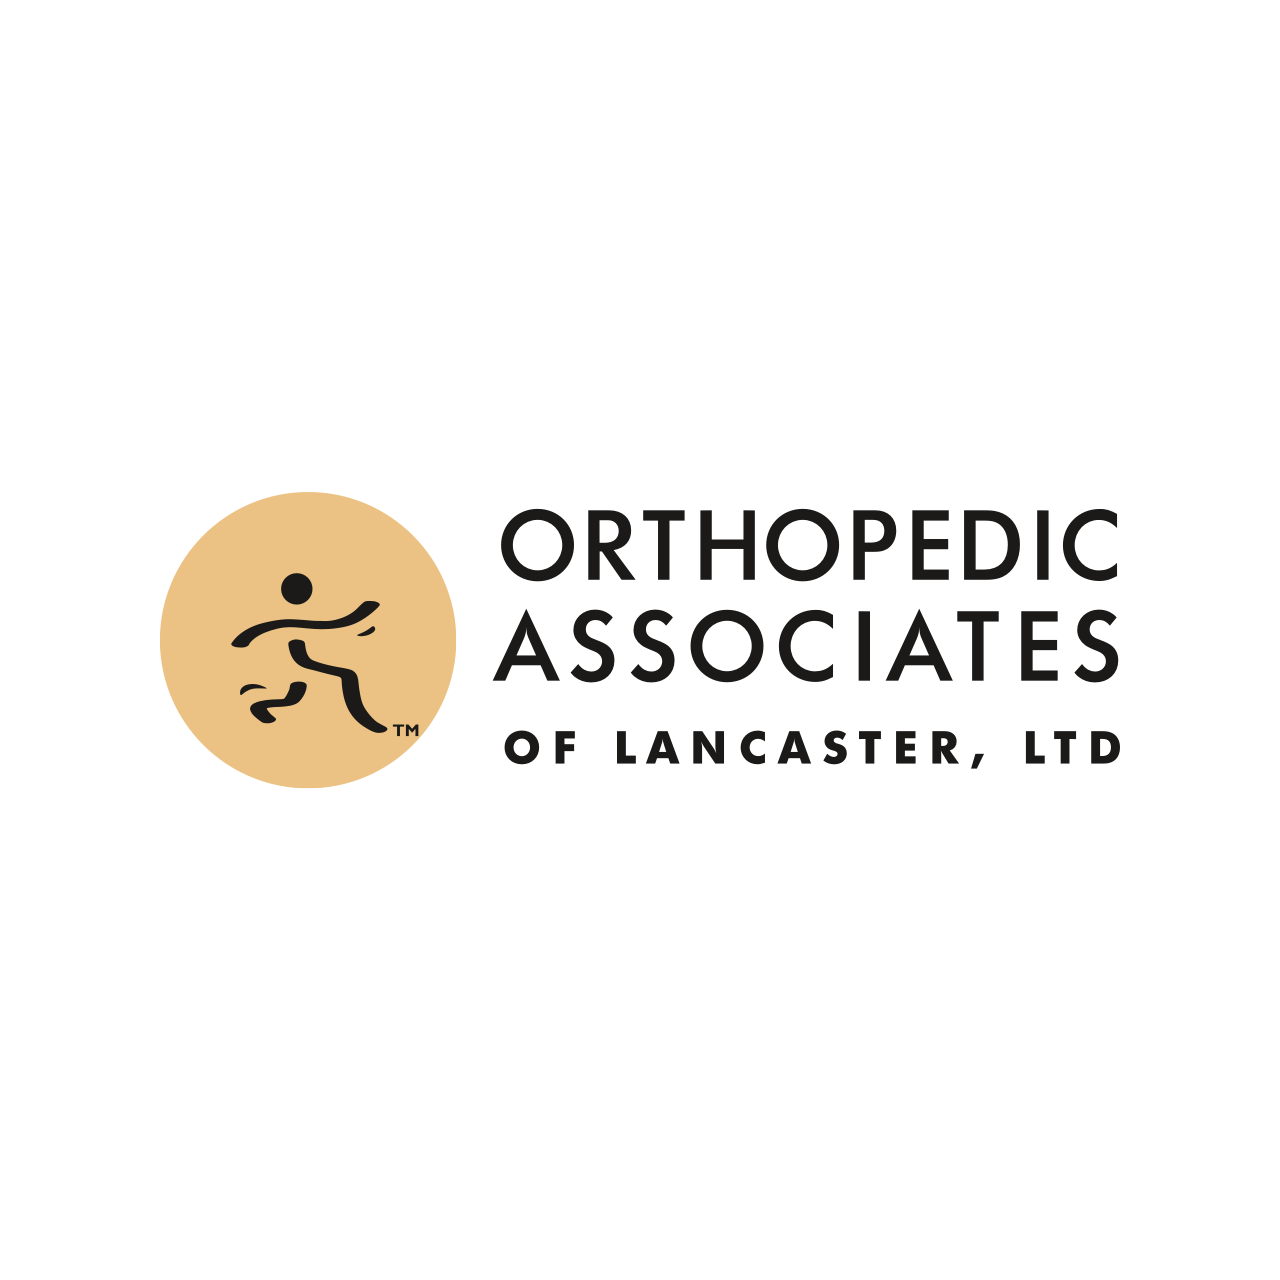 Orthopaedic Associates of Lancaster, LTD